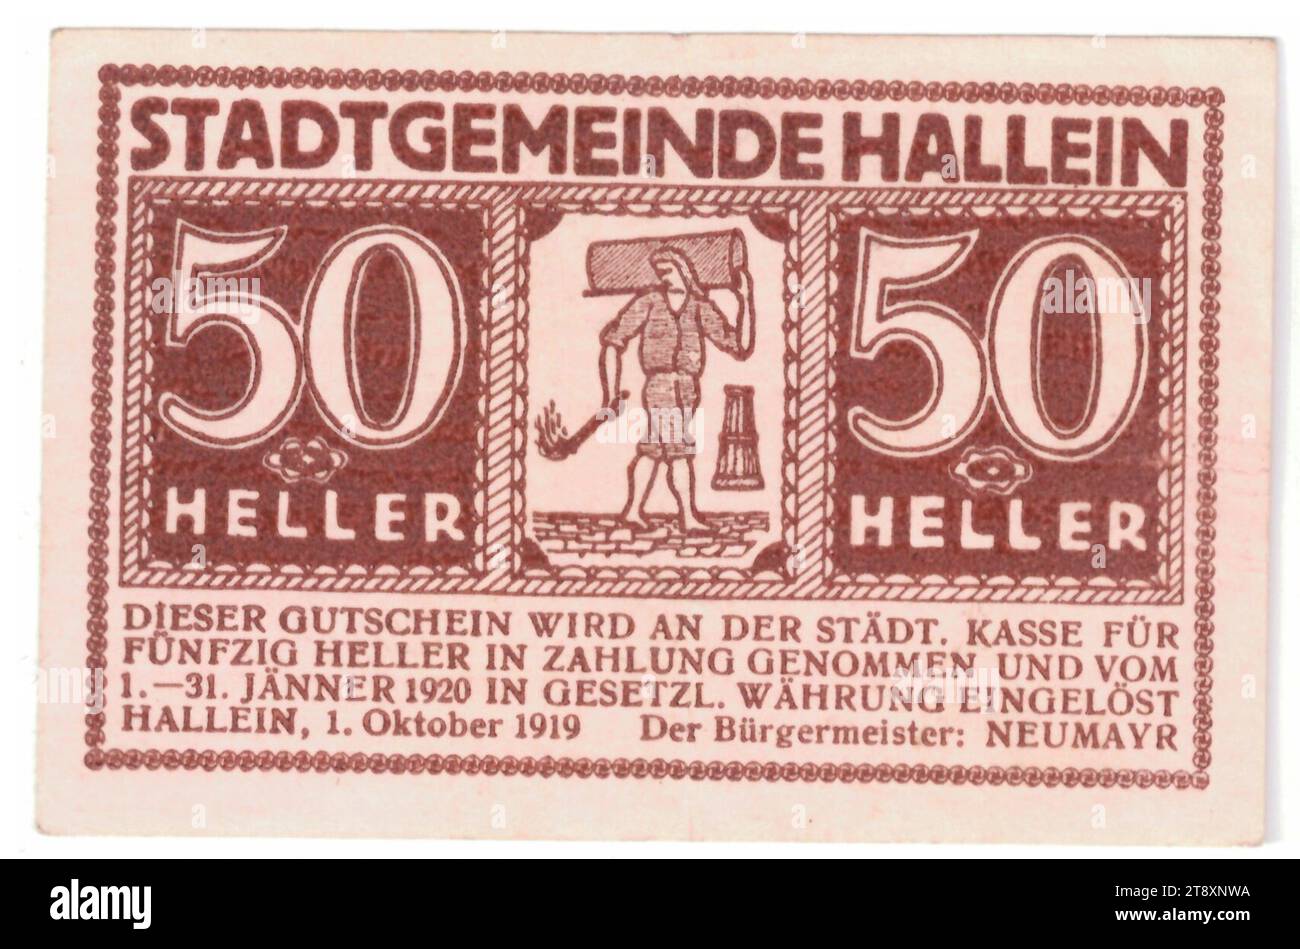 Voucher, 50 Heller, Municipality Hallein (Salzburg), Mint Authority, 1.10.1919-31.1.1920, paper, print, height 45 mm, width 68 mm, mint area, Austria, 1st Republic (1918-1933), finance, trade mark, private coin, The Vienna Collection Stock Photo